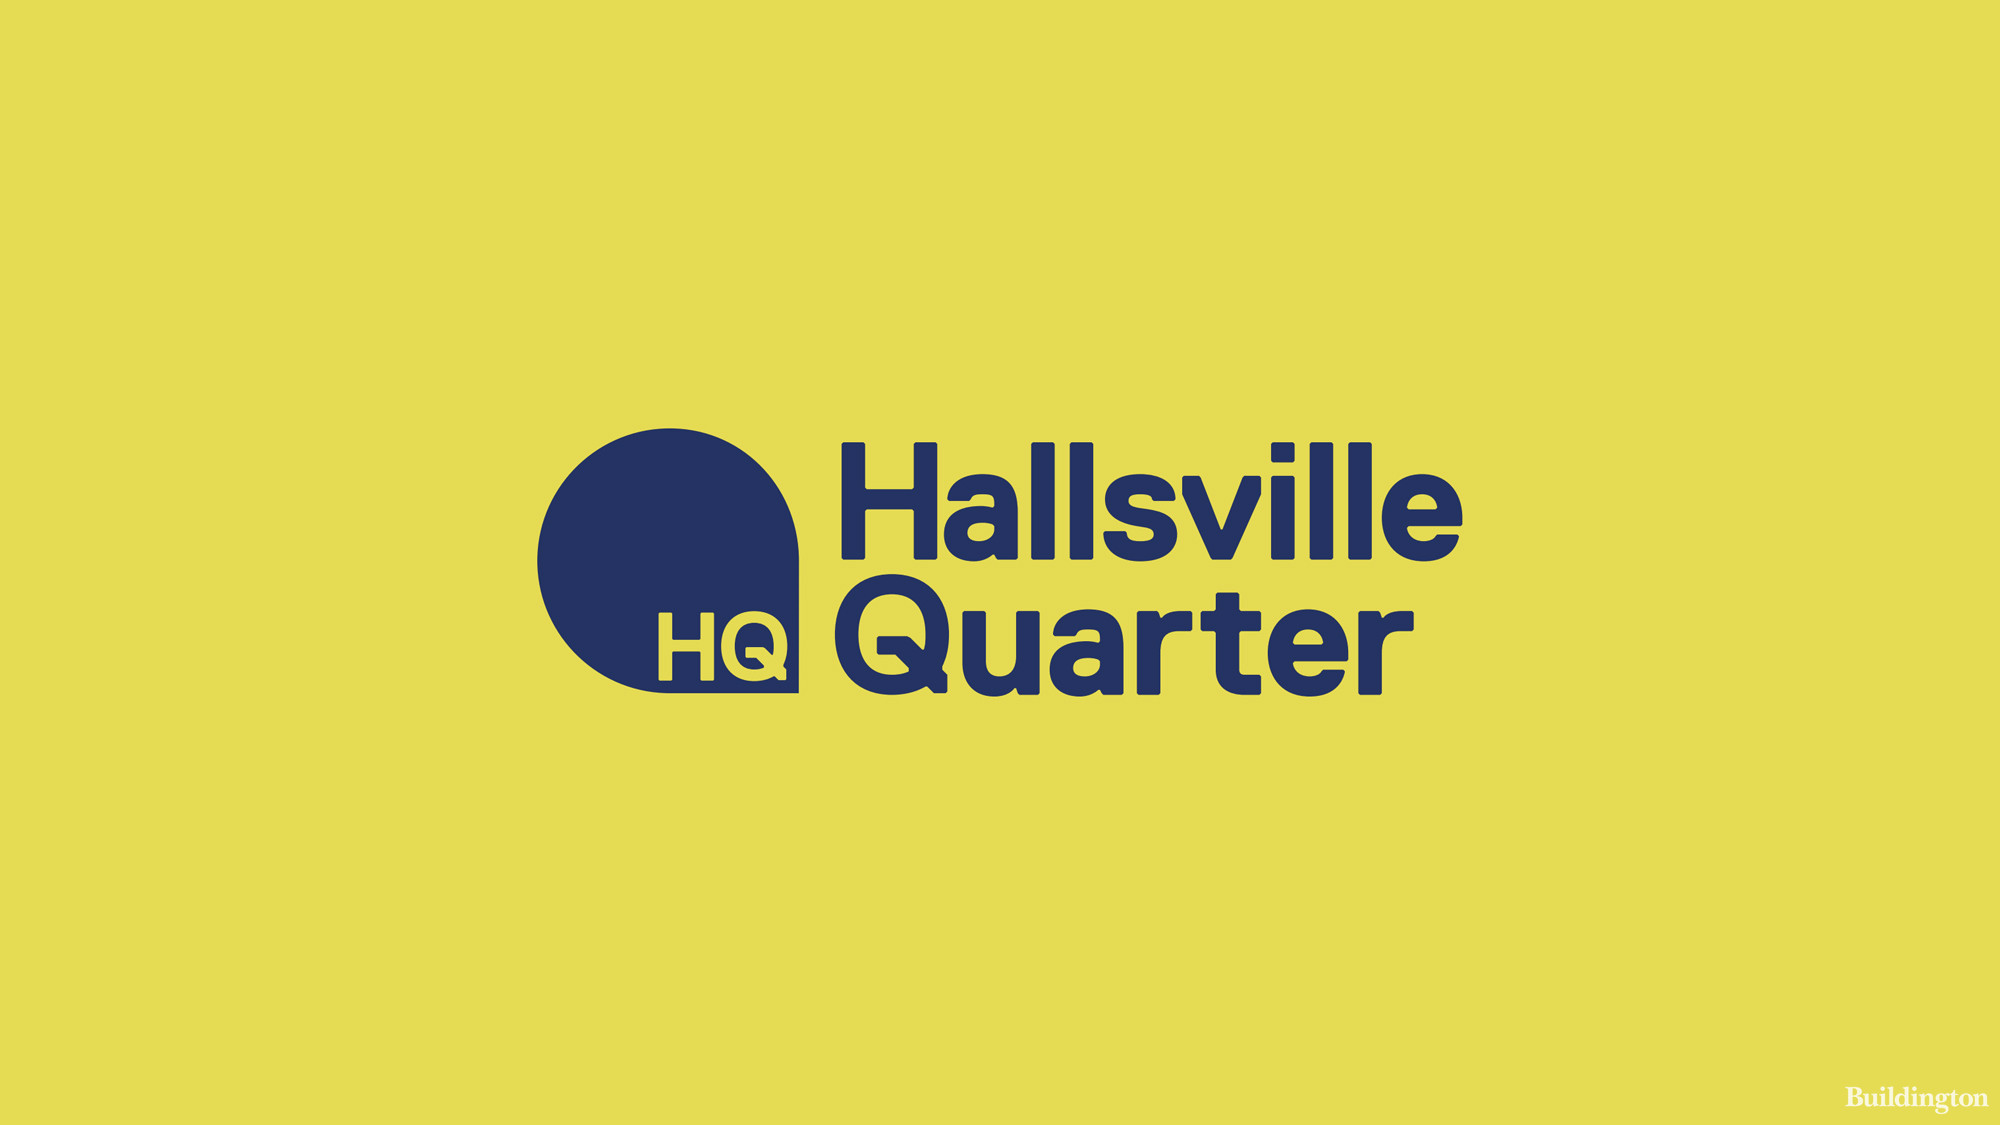 Hallsville Quarter development logo